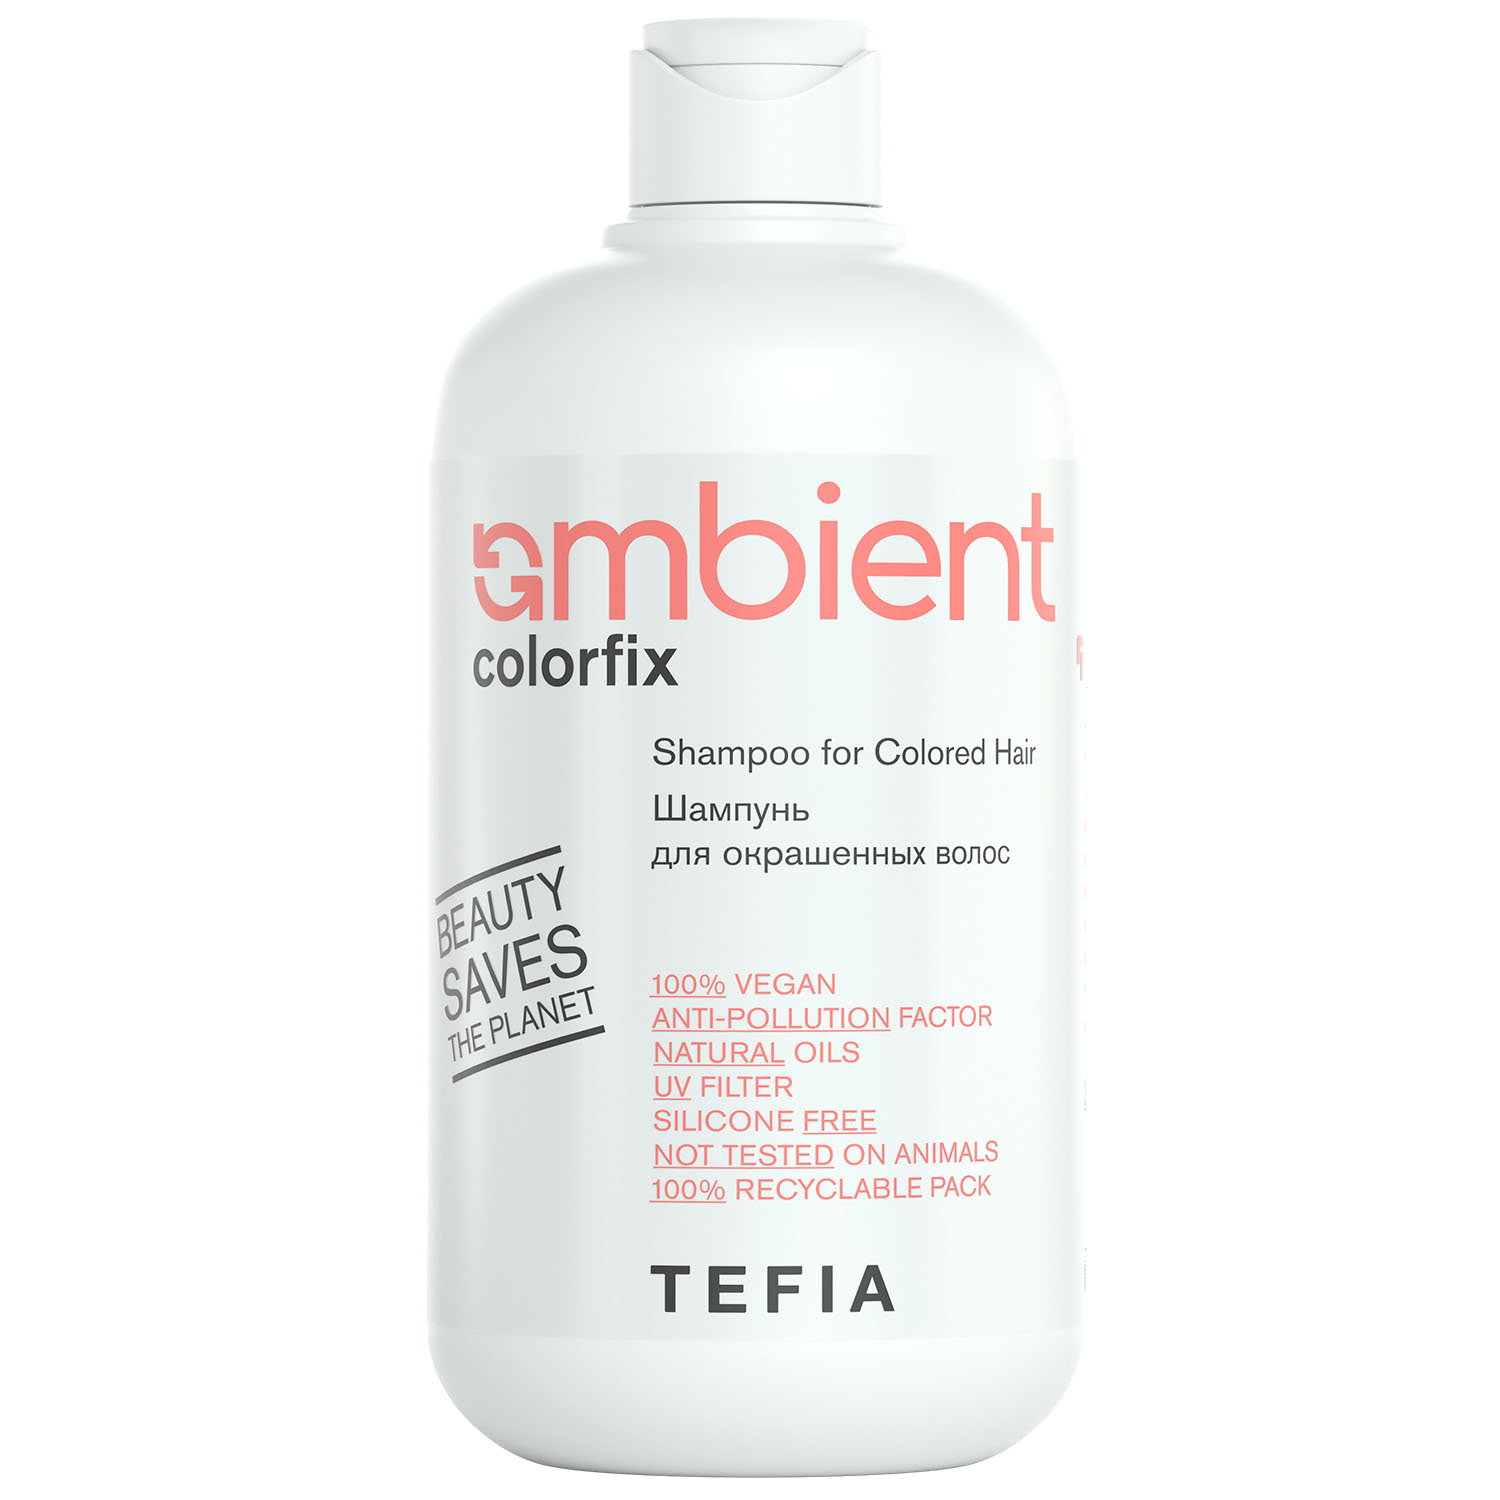 Tefia Шампунь для окрашенных волос Shampoo for Colored Hair, 250 мл (Tefia, Ambient) tefia бессульфатный нейтрализующий шампунь холодный фиолет cool violet shampoo 250 мл tefia ambient